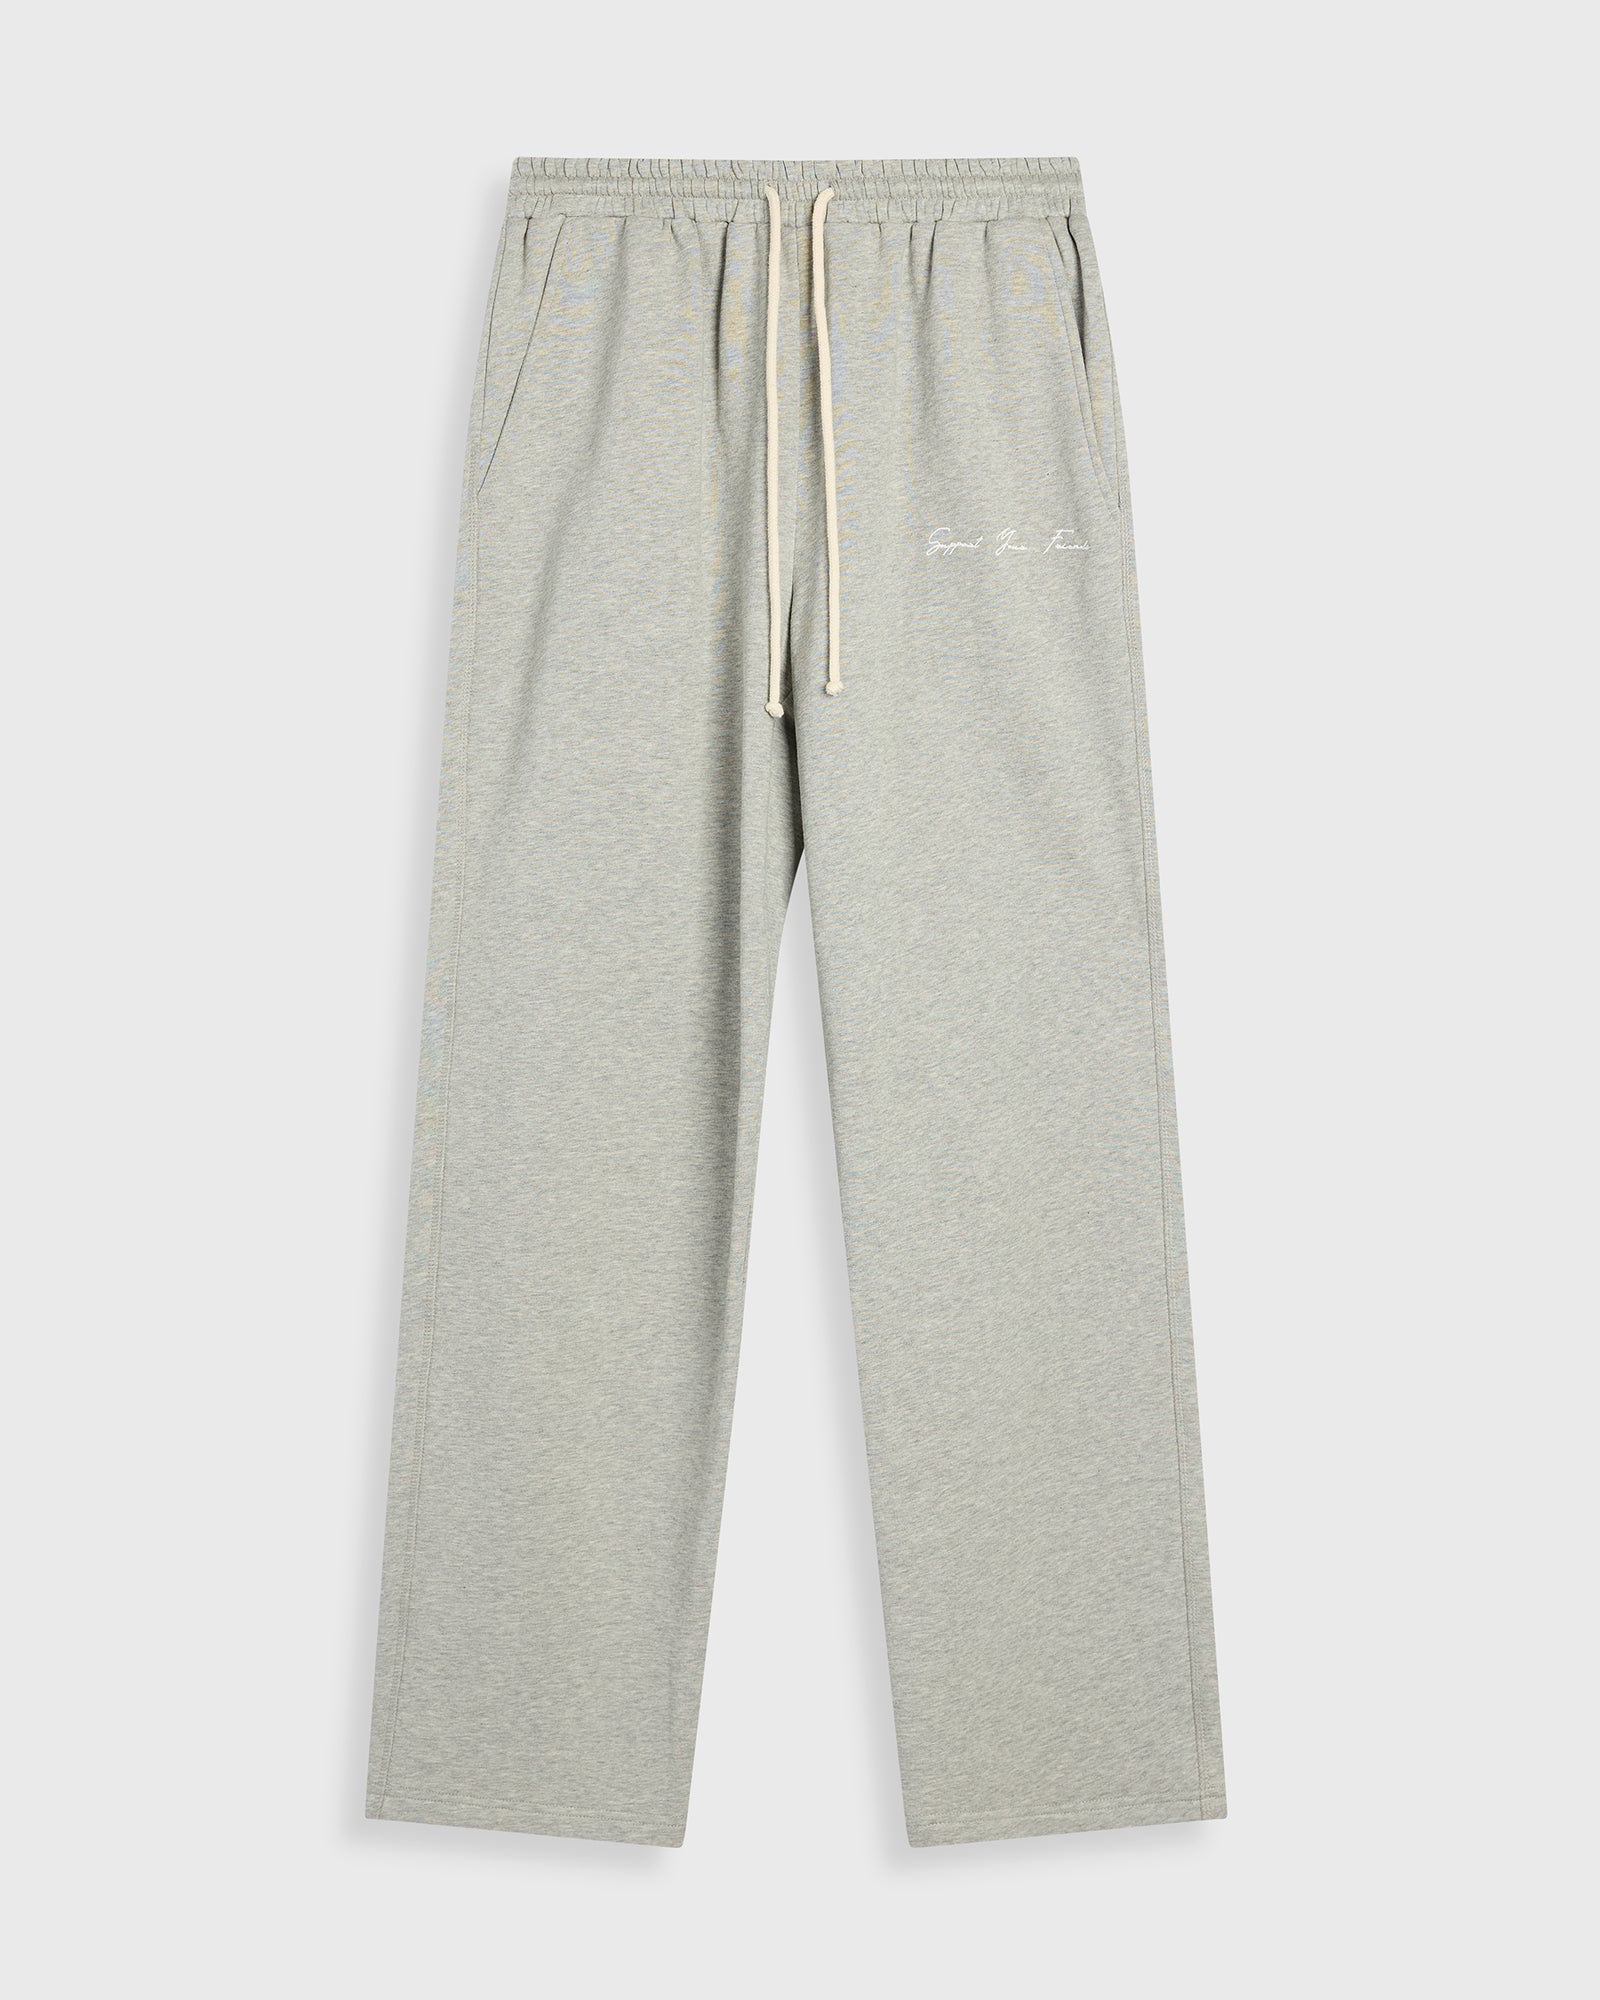 heather grey sweat set hoody & sweatpants oversized unisex fit for men & women high-quality 100% cotton